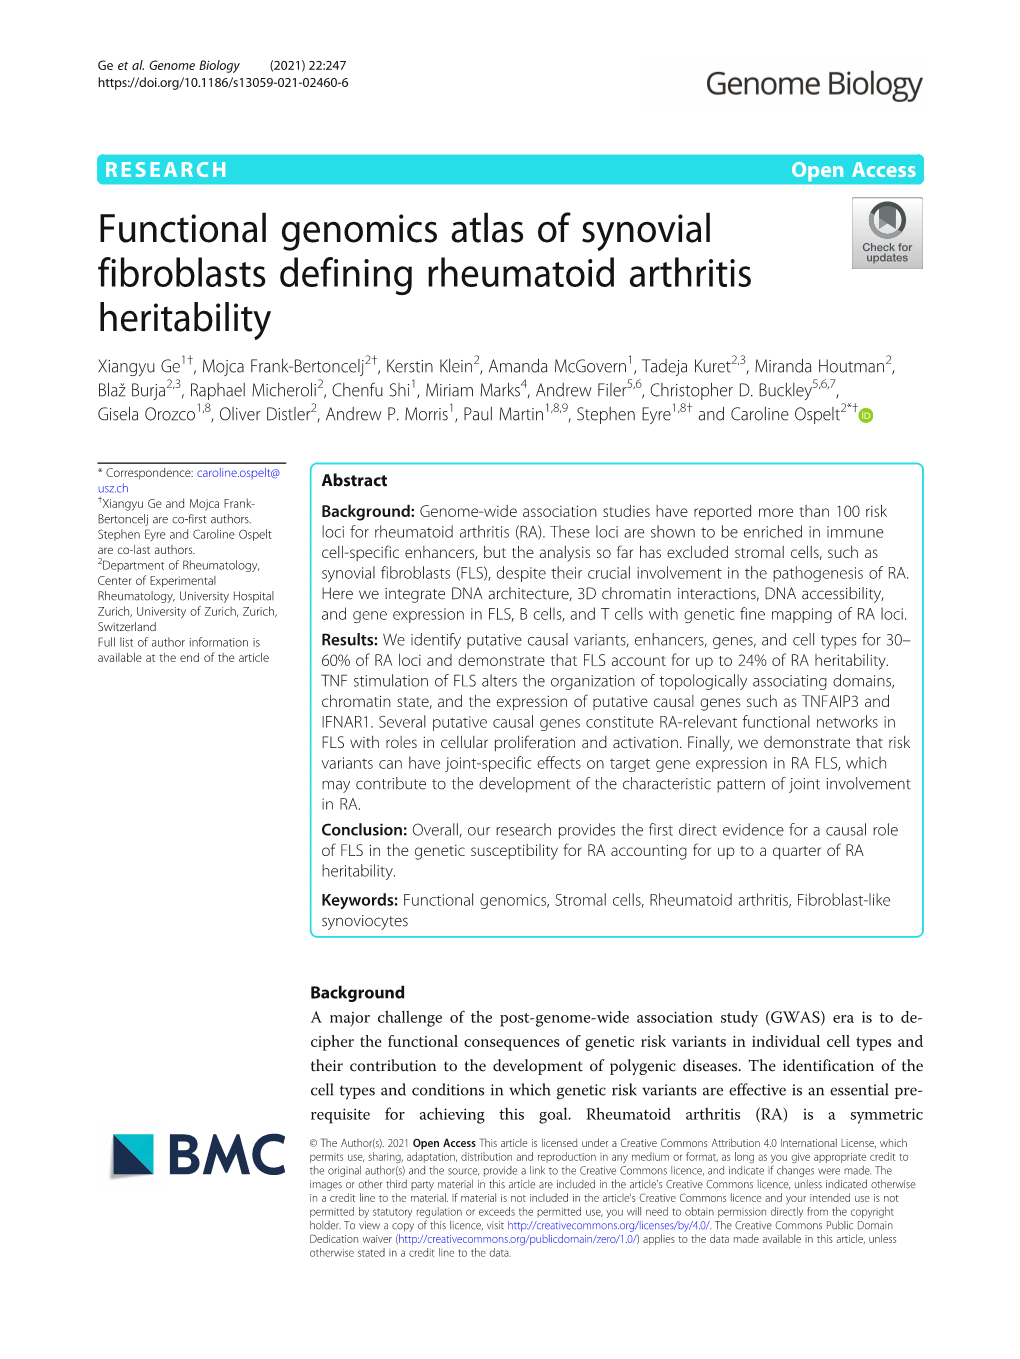 Functional Genomics Atlas of Synovial Fibroblasts Defining Rheumatoid